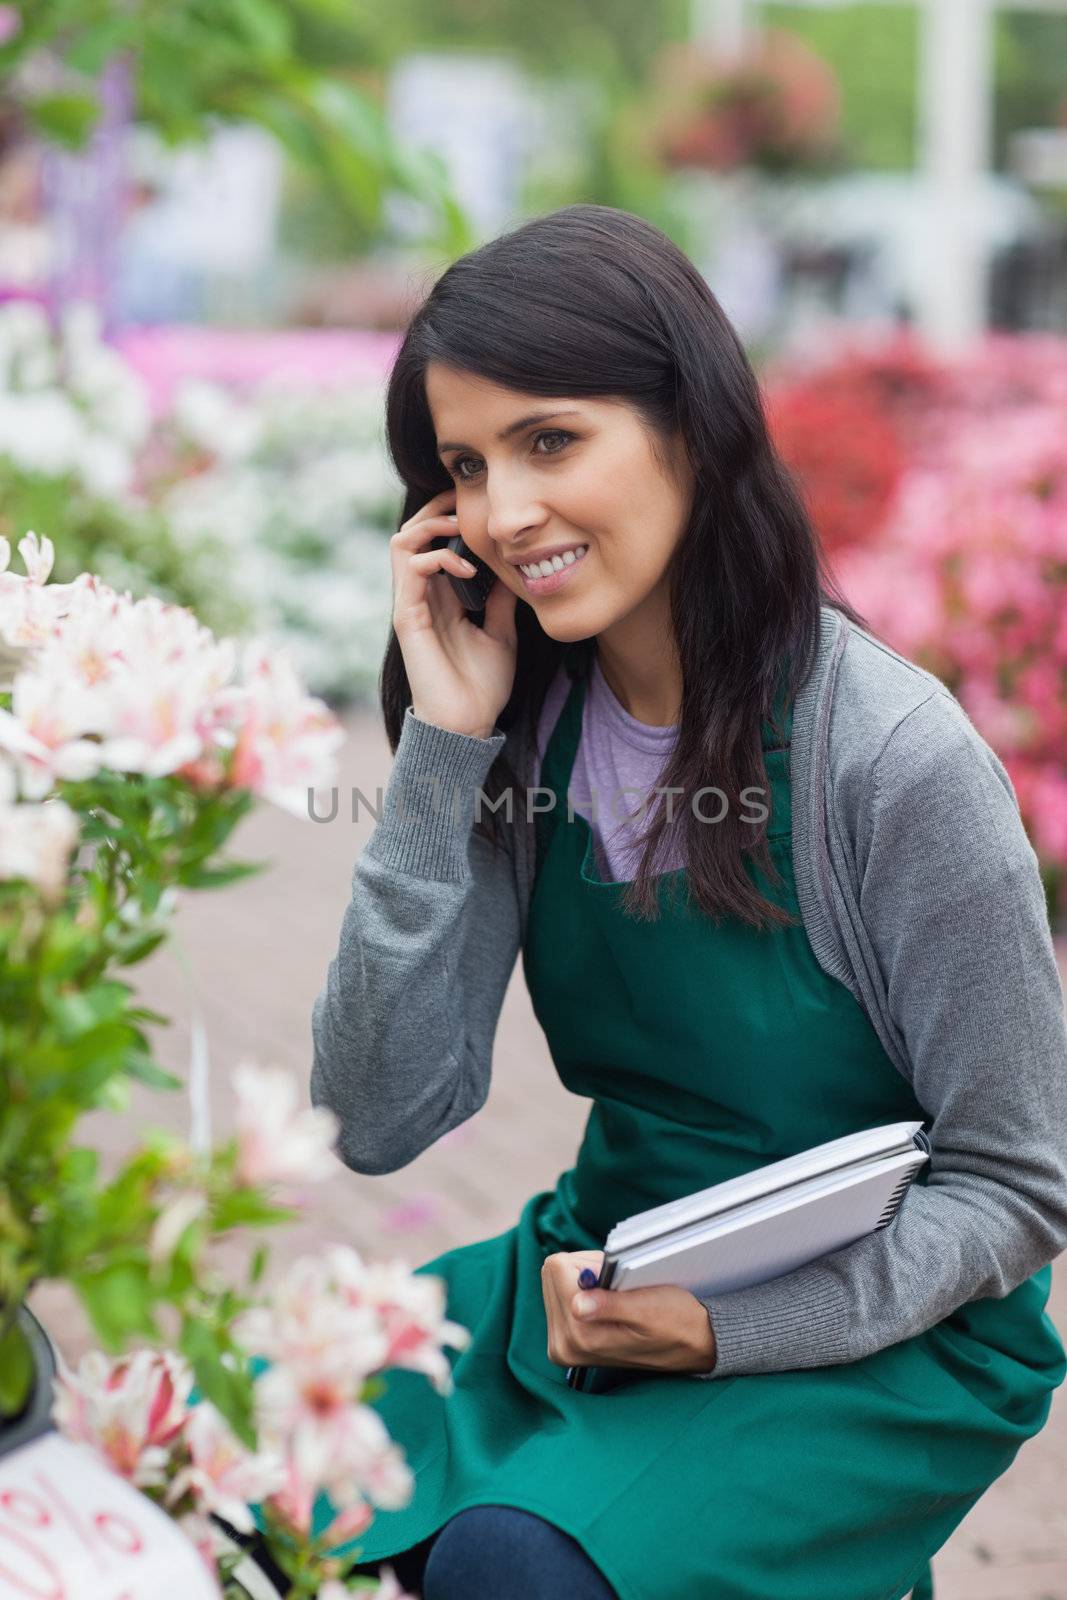 Employee doing stocktaking while calling in garden center by Wavebreakmedia